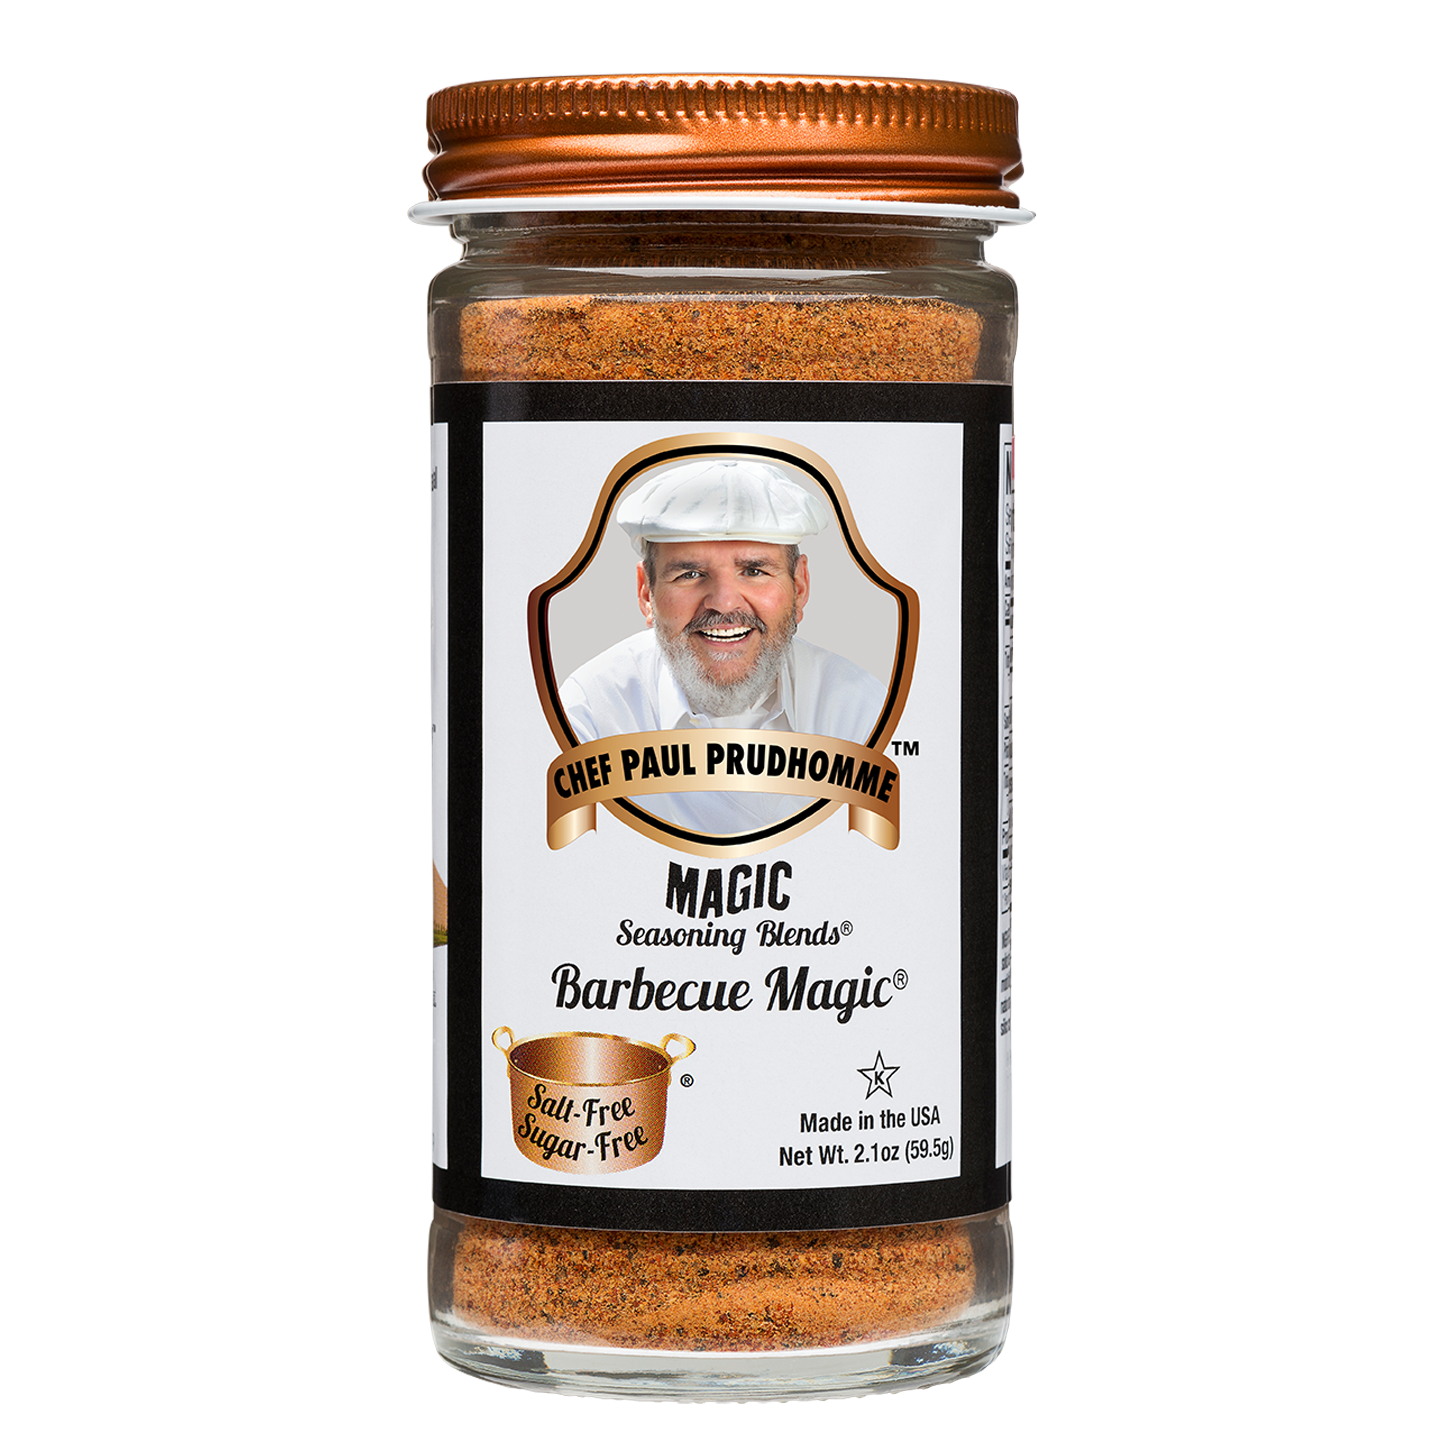 Salt-Free Sugar-Free: Barbecue Magic® 2.1 oz.